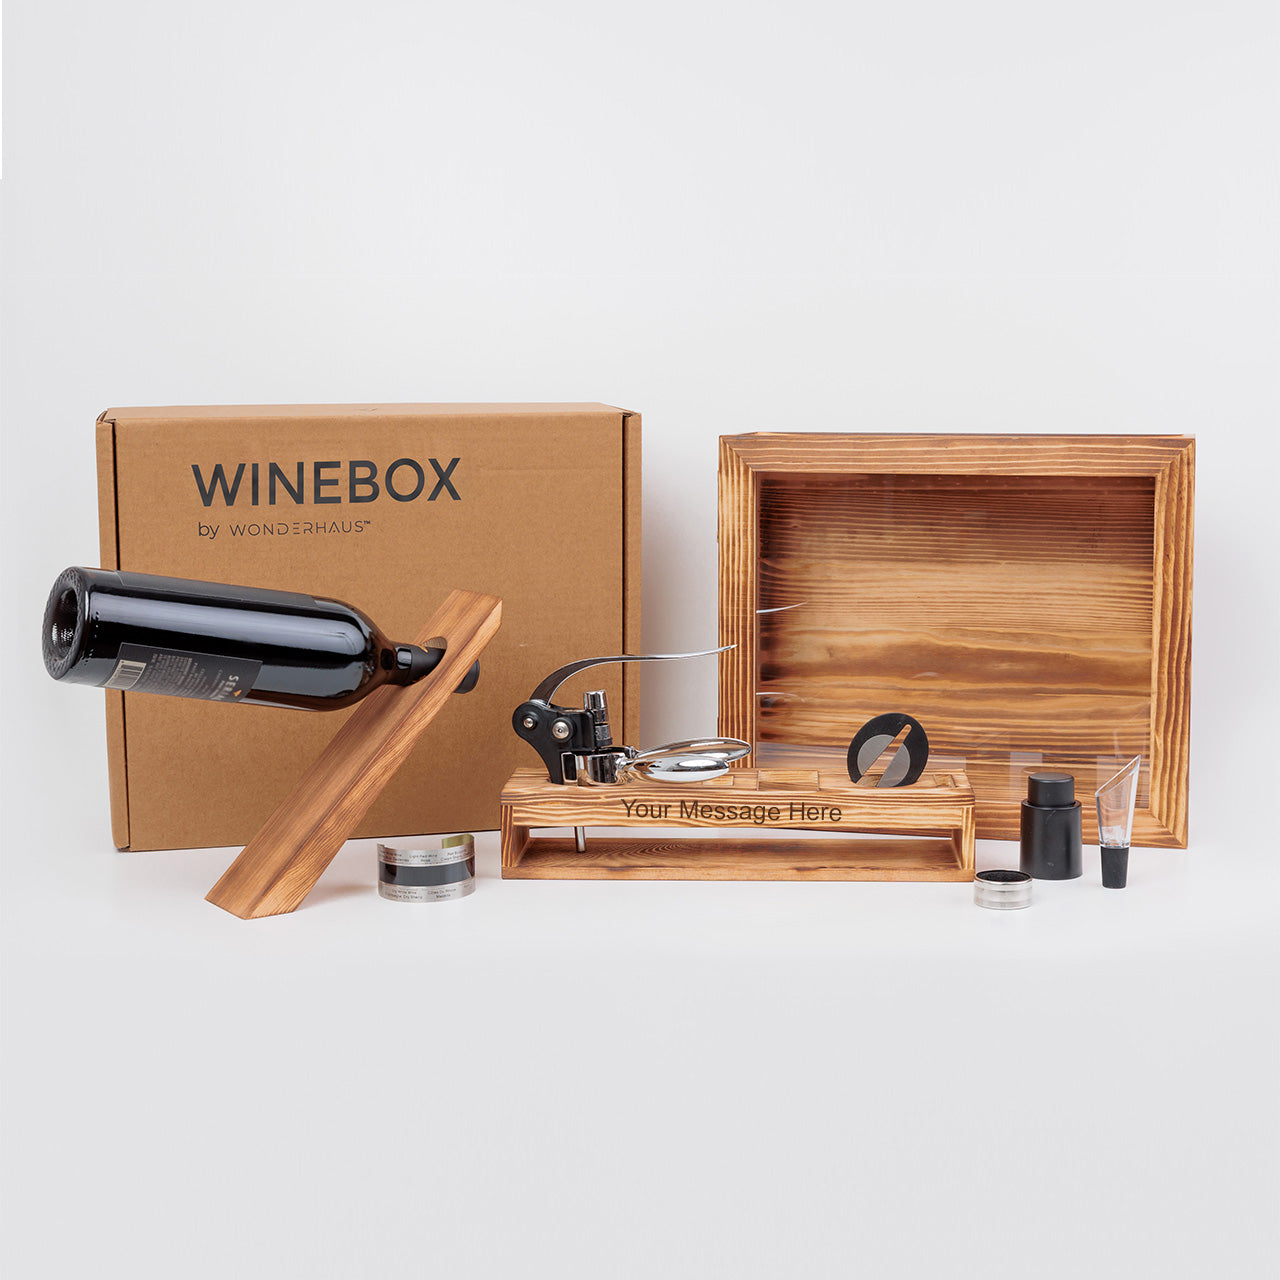 Customize this wonderful wine gift box set!